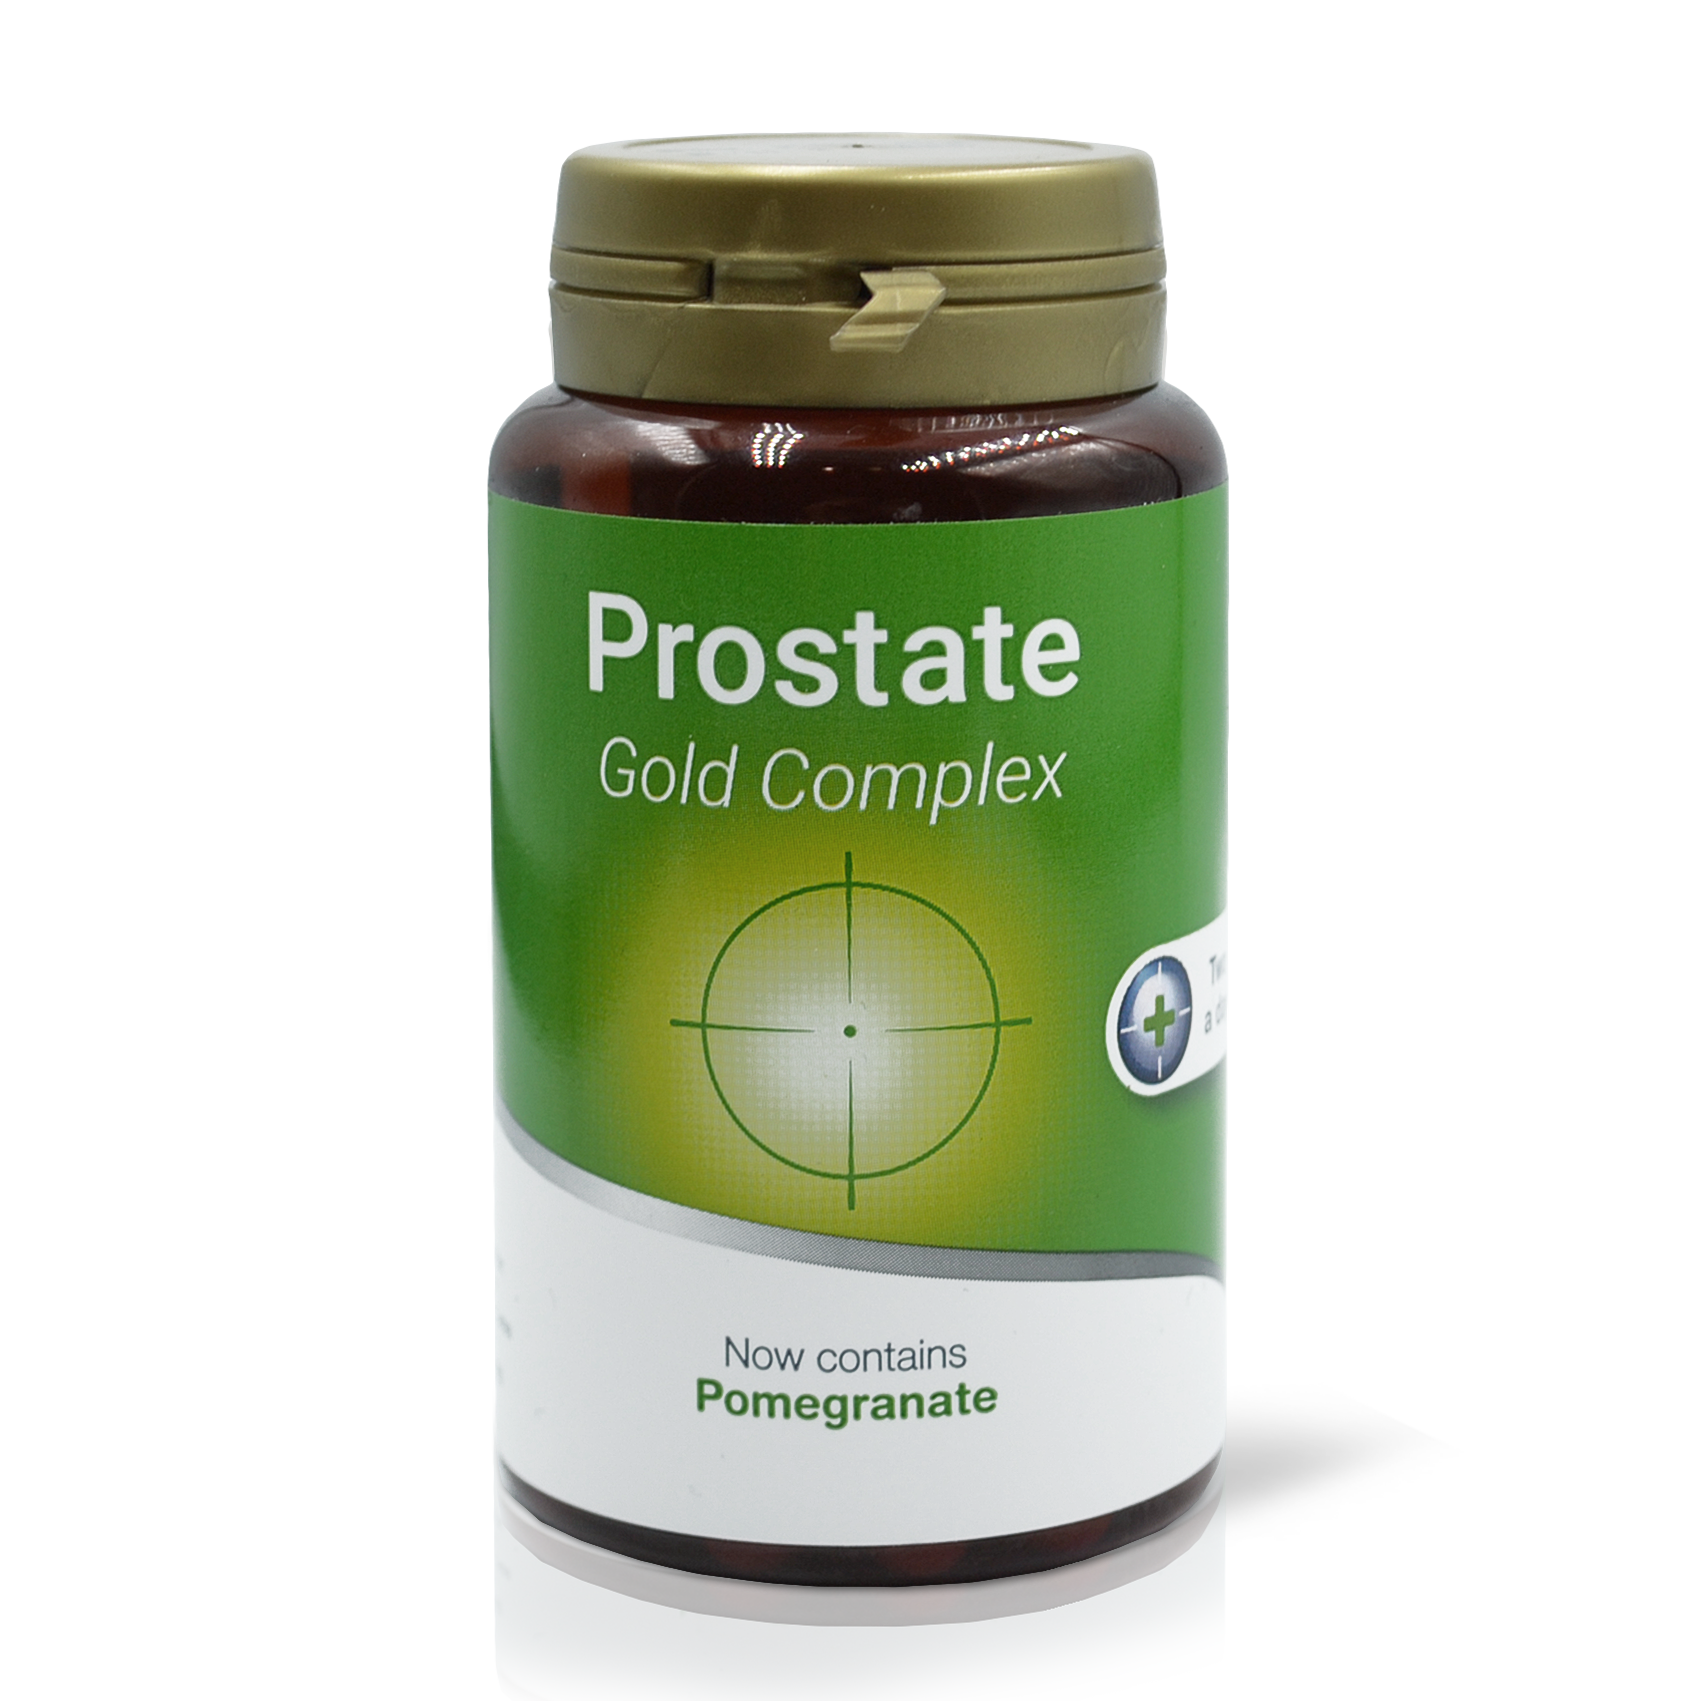 Prostate Gold Complex